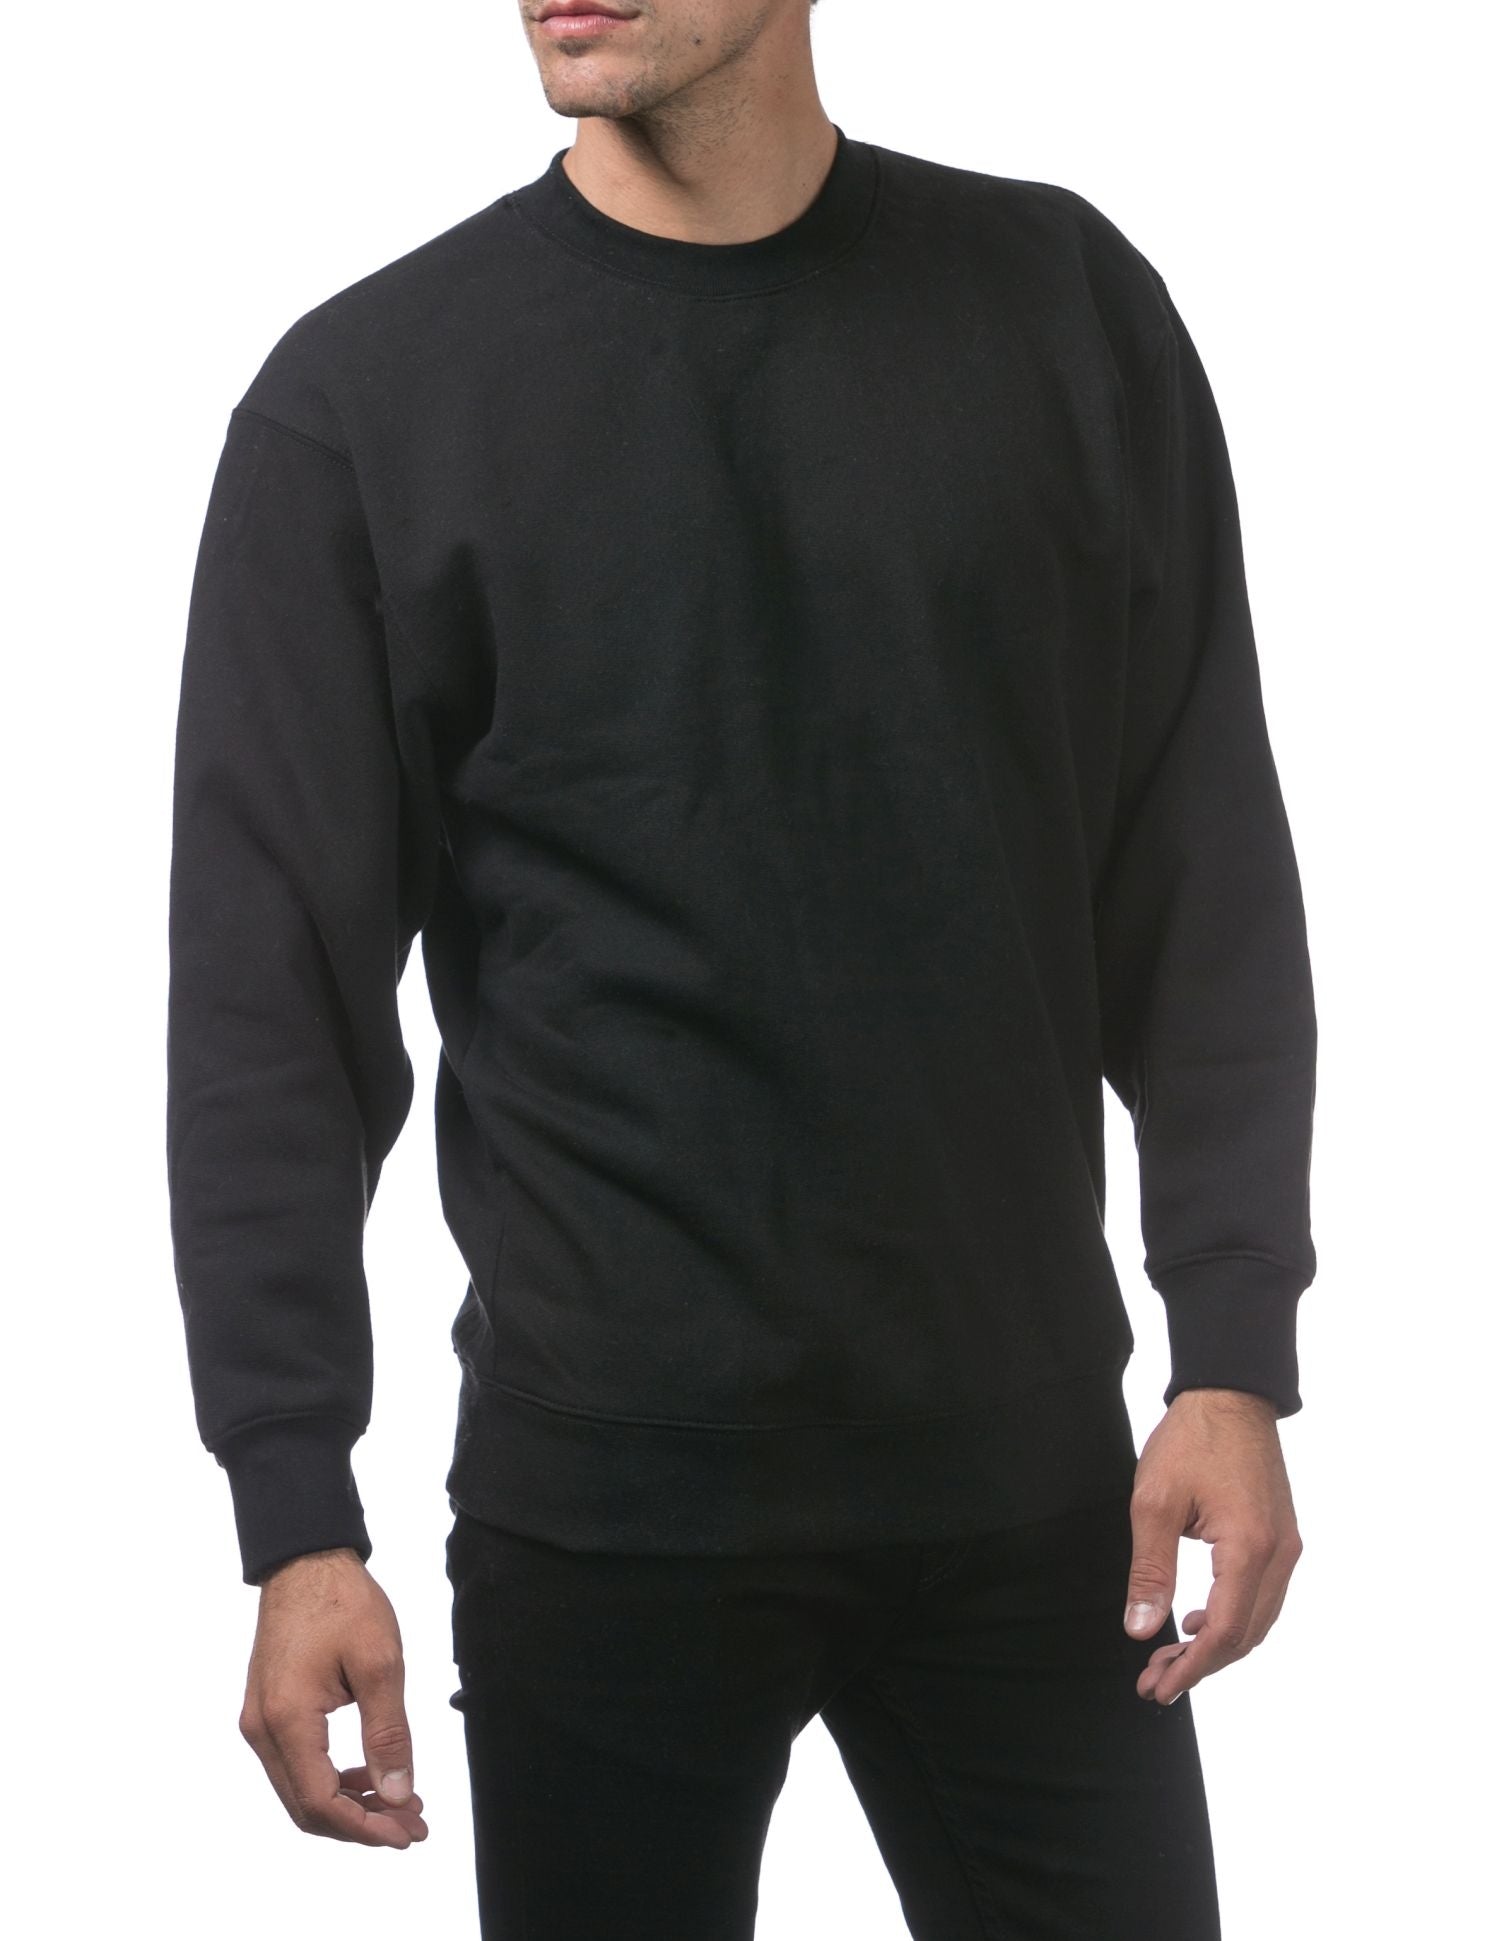 Pro Club Men's Comfort Crew Neck Fleece Pullover Sweater - Black - Small - Pro-Distributing